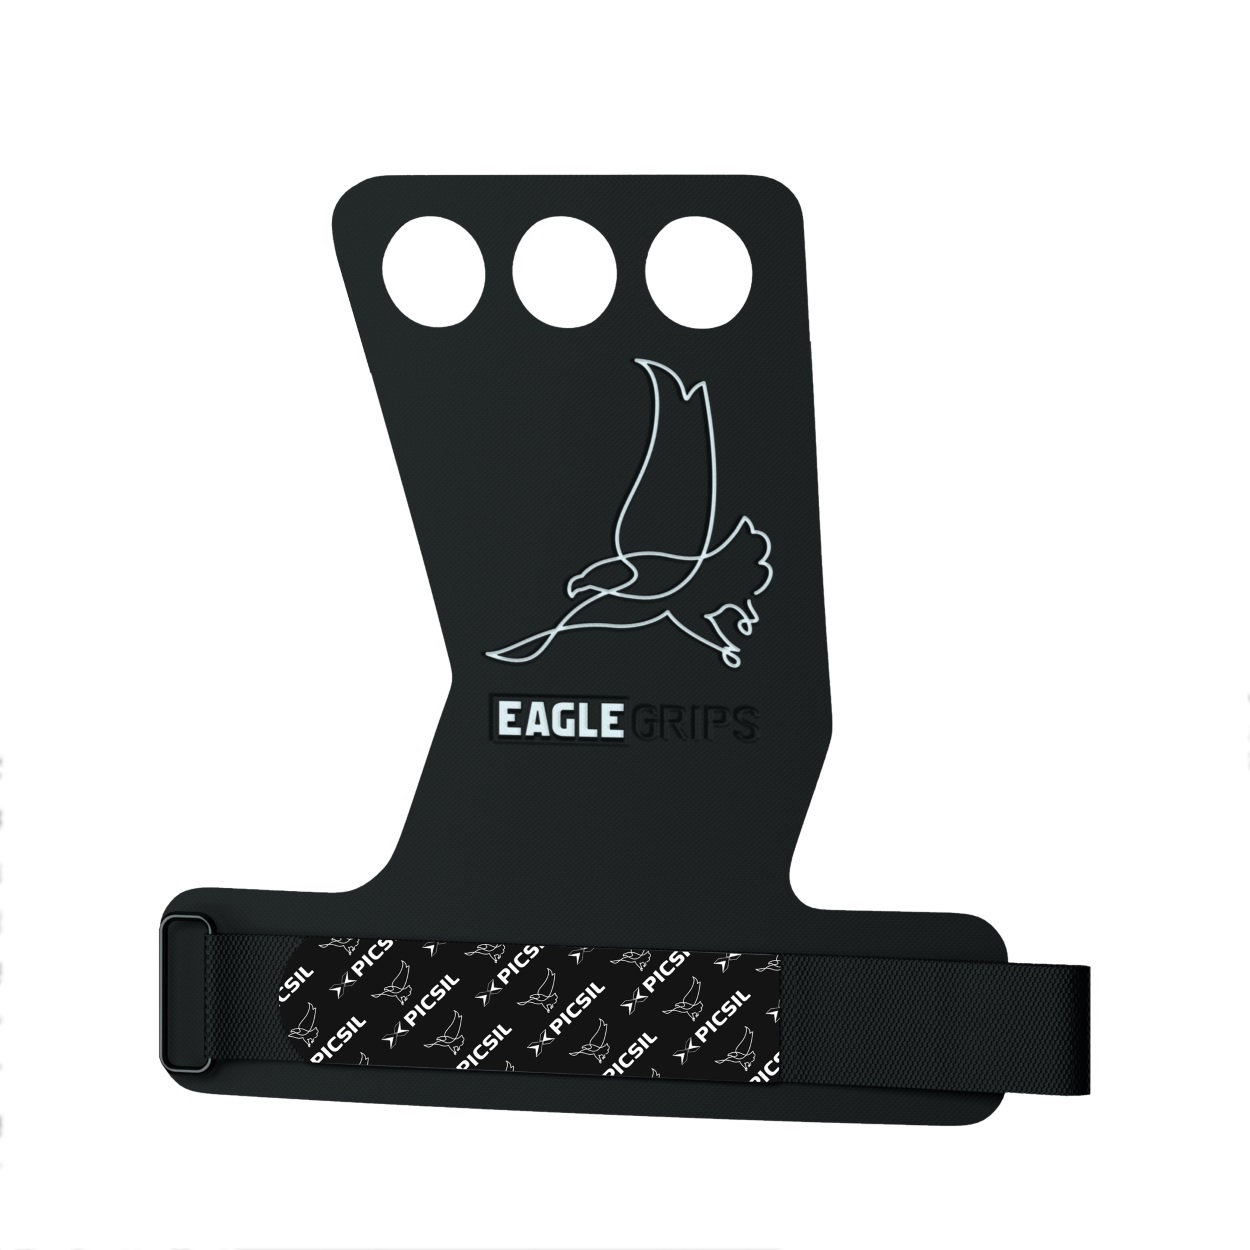 PICSIL Eagle Grip 3 finger grips - Very Black Store